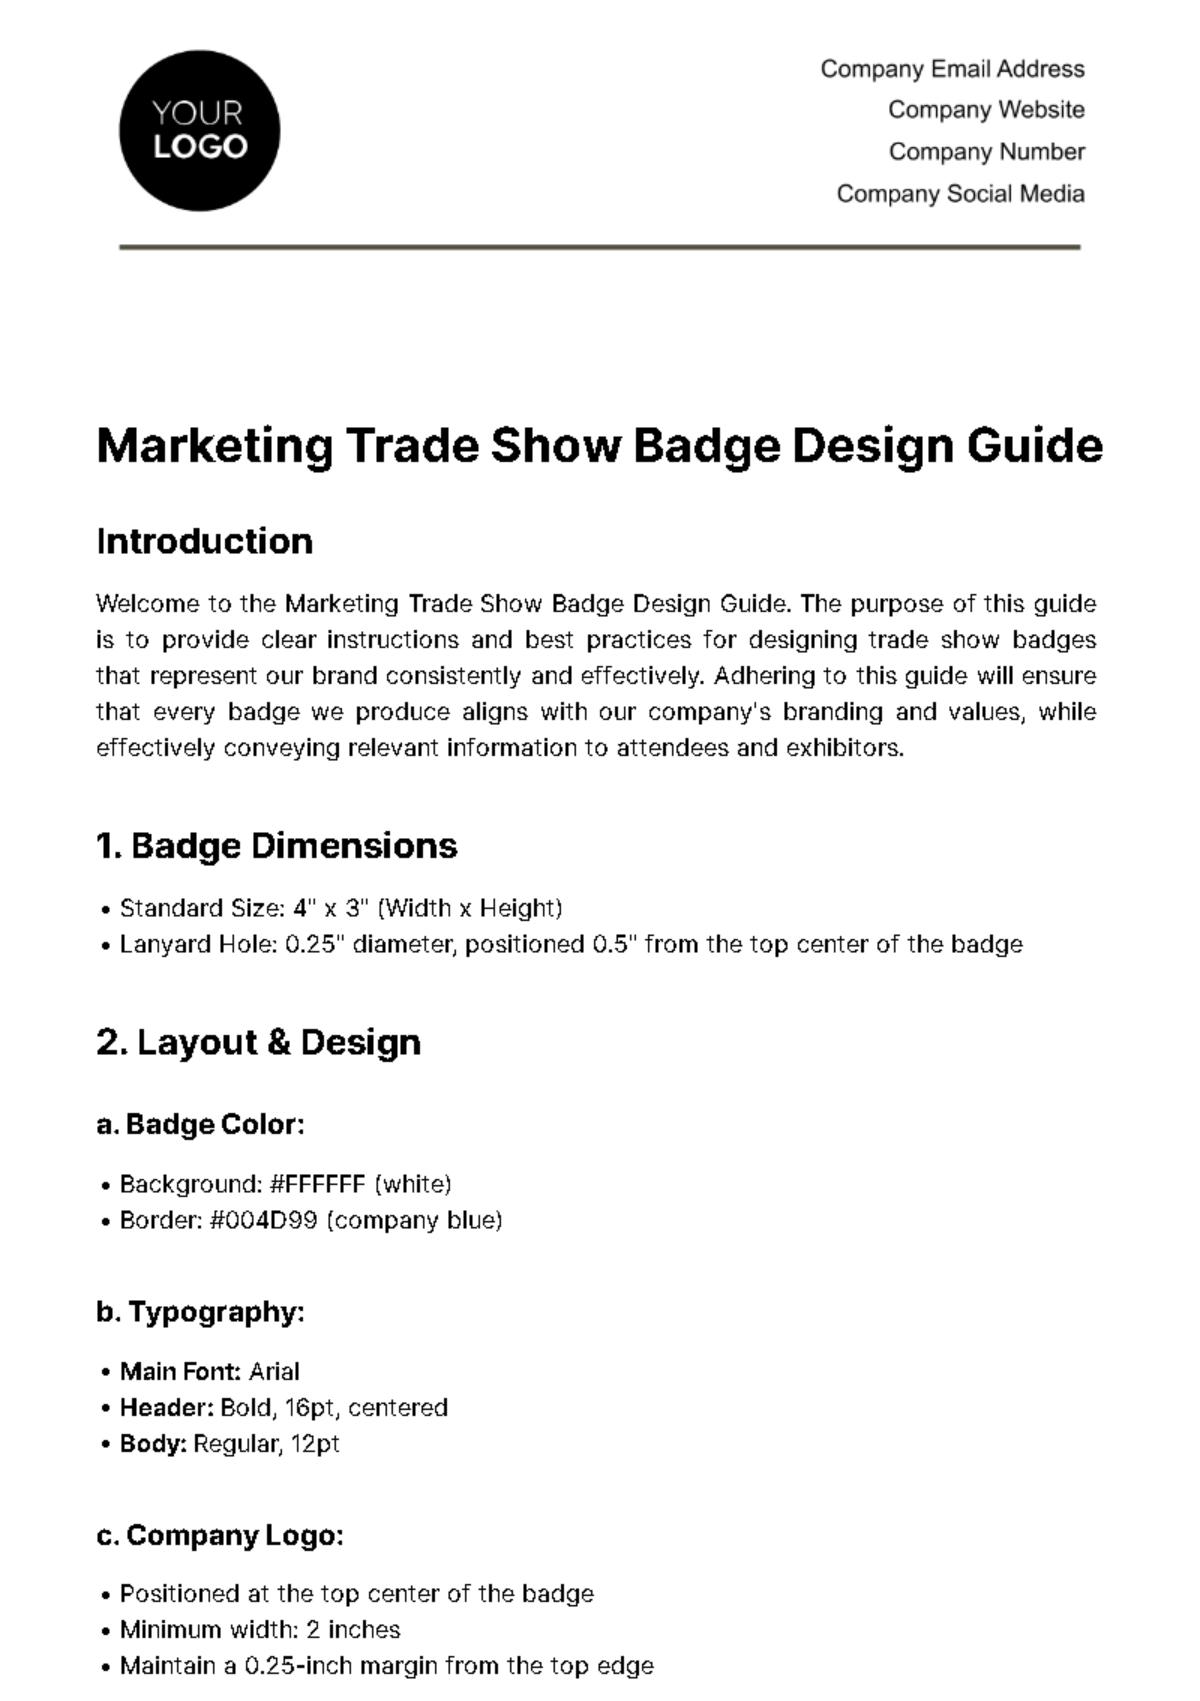 Marketing Trade Show Badge Design Guide Template